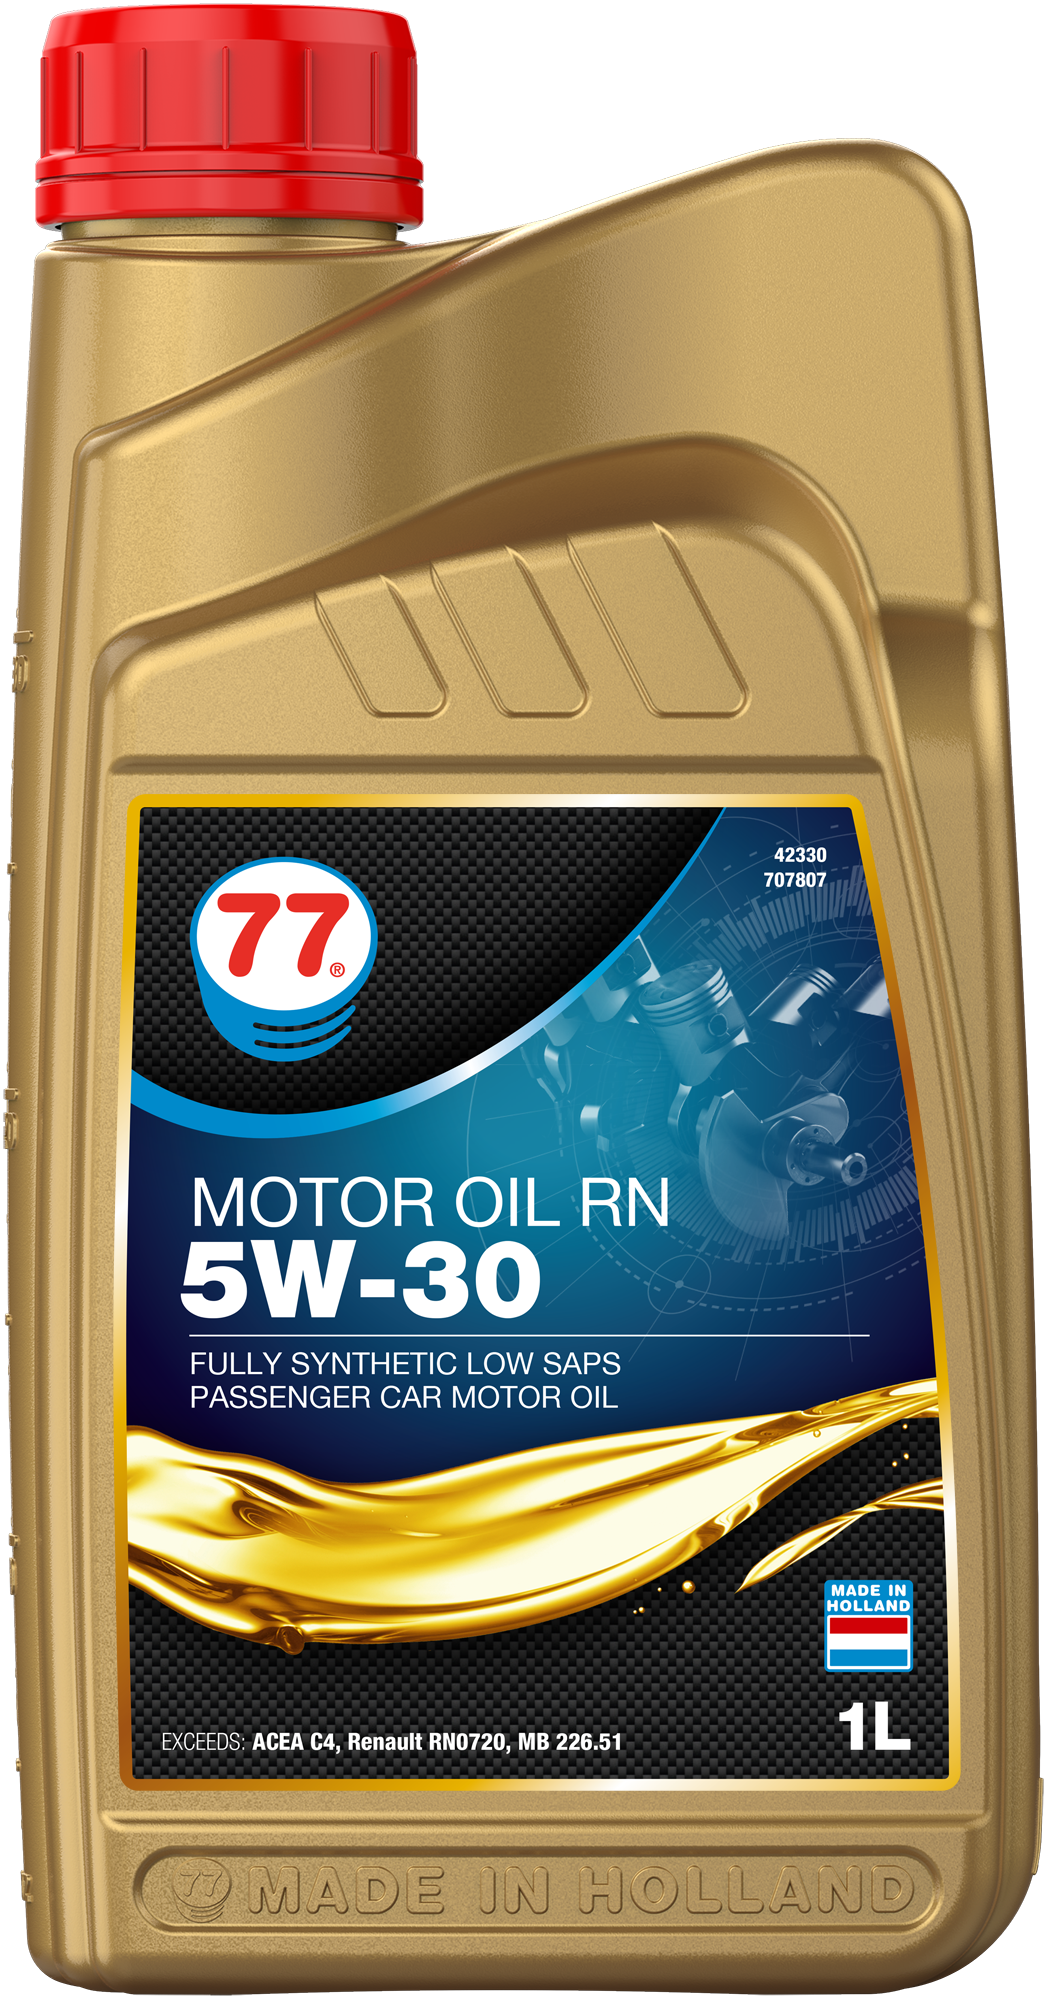 OUT0140-4233-1D2017 Motor Oil RN 5W-30 van 77 lubricants is een high performance brandstofbesparende LOW SAPS-olie op basis van 100% synthetische technologie.